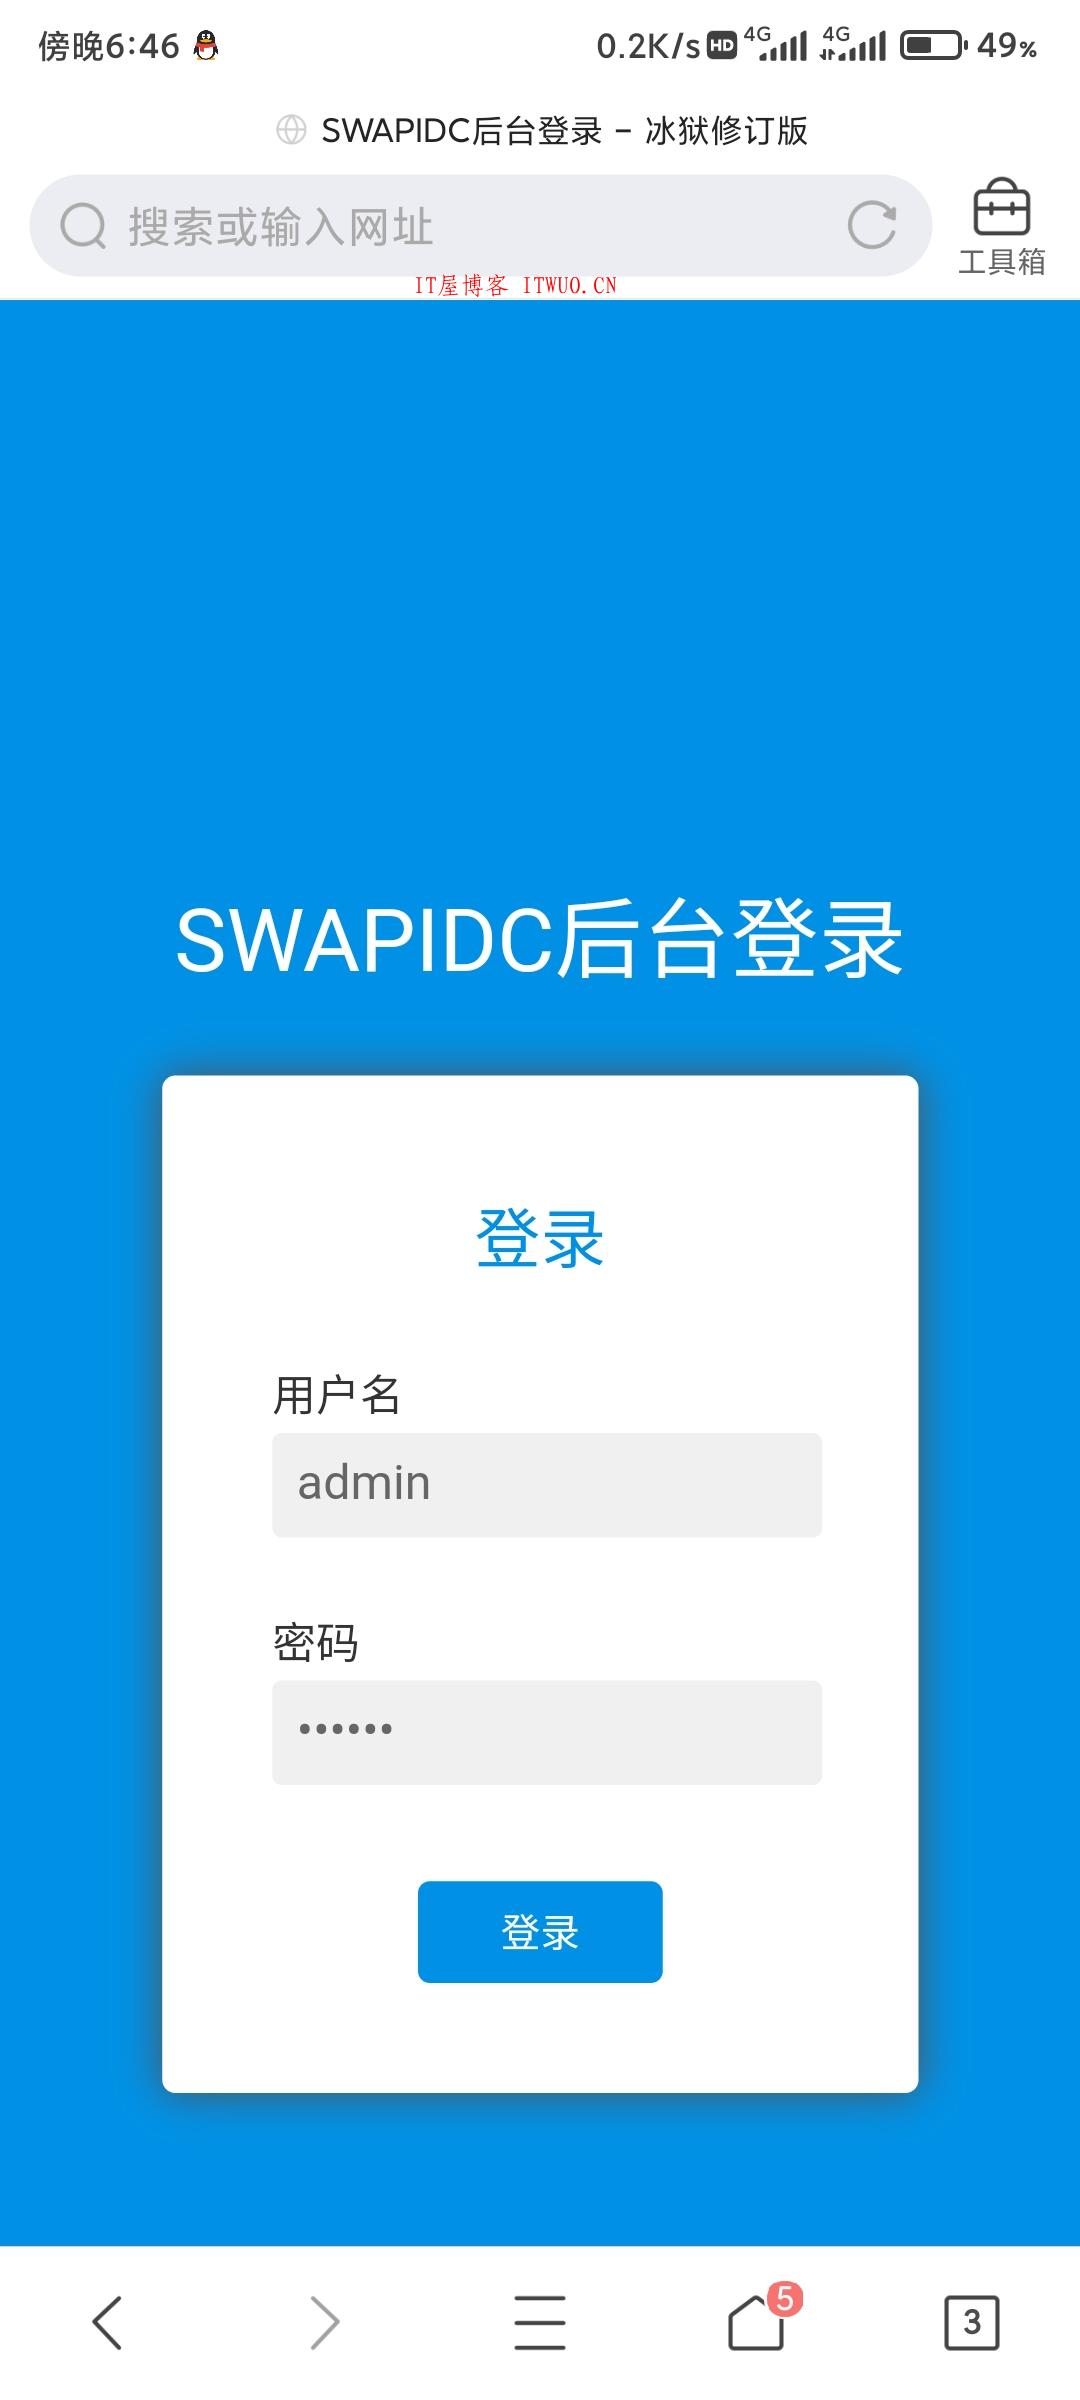 SWAPIDC去云中心,插件价值远超300元 基于SWAPIDC最新版修改css js全部本地化